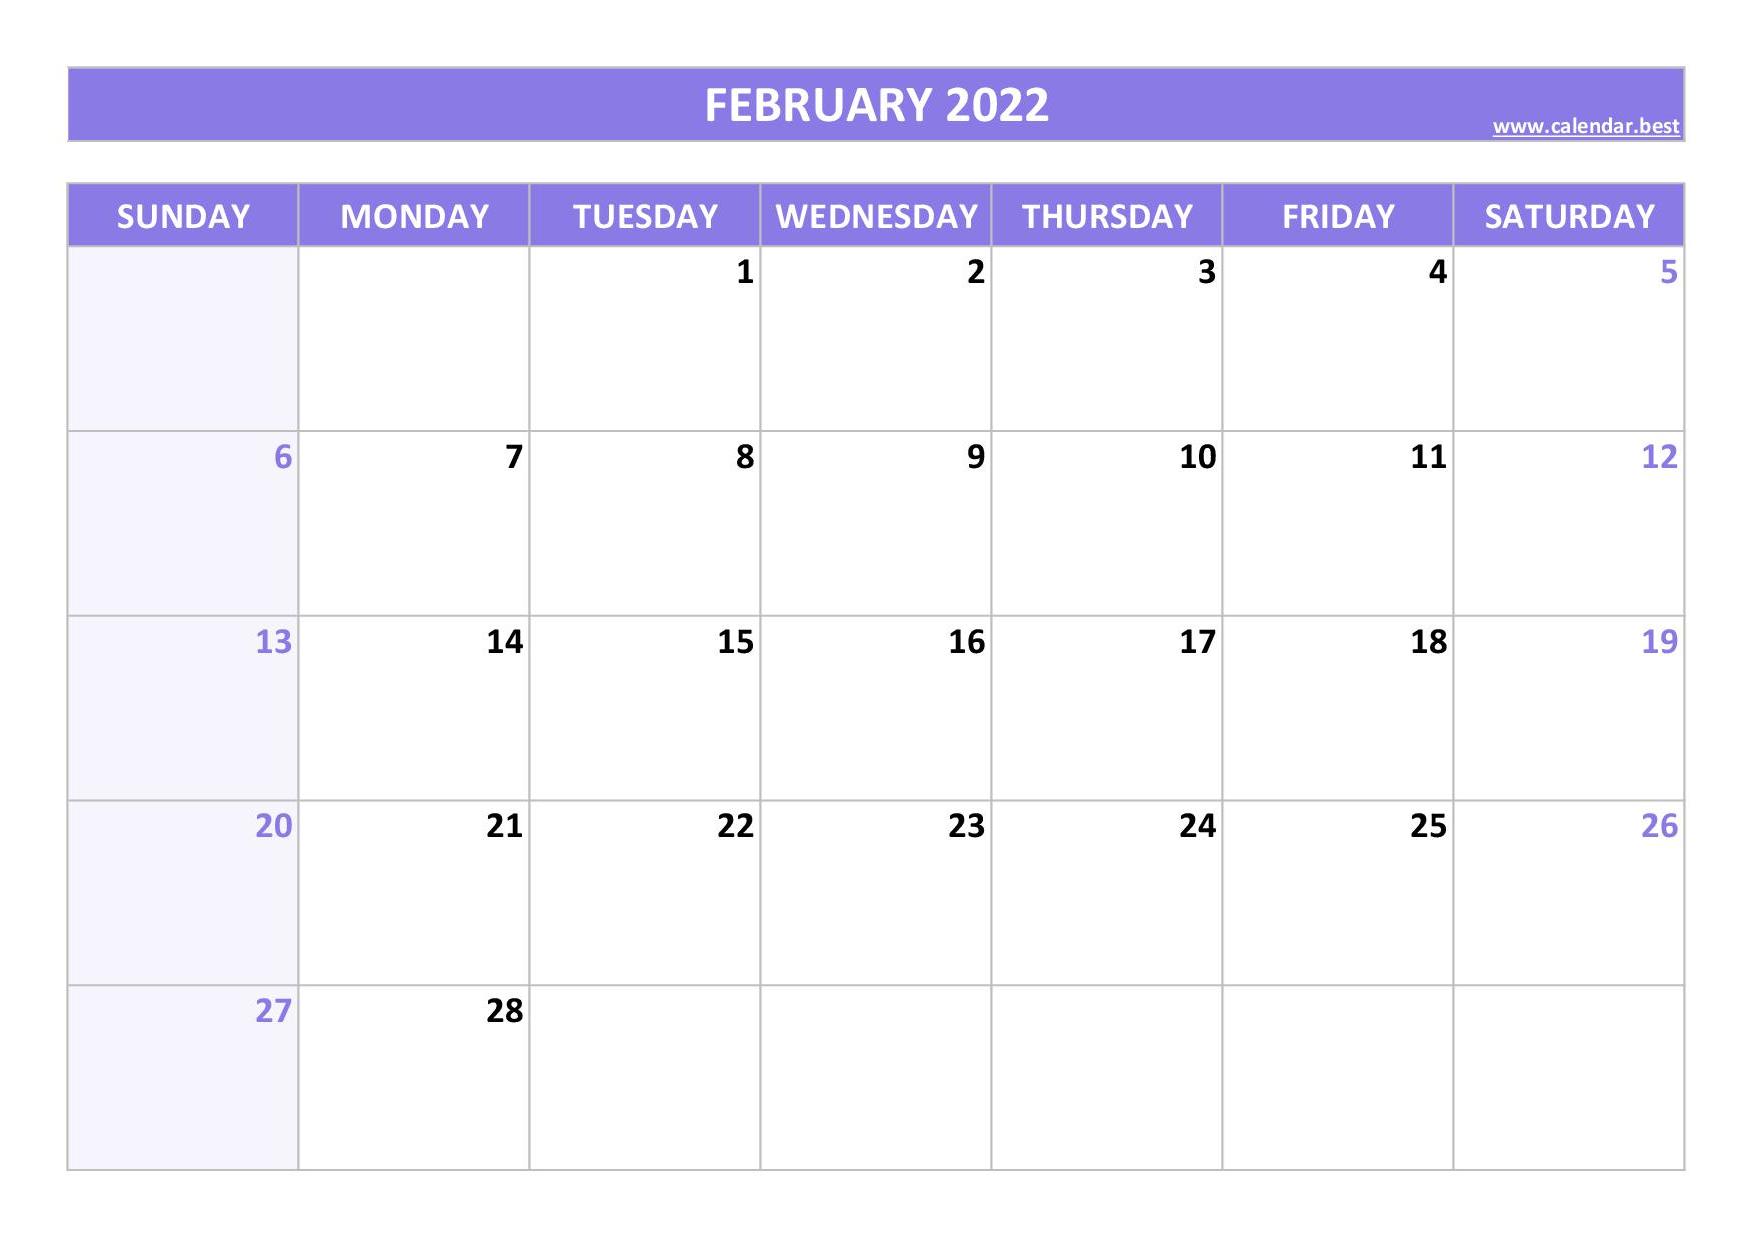 Print Calendar February 2022 February 2022 Calendar -Calendar.best